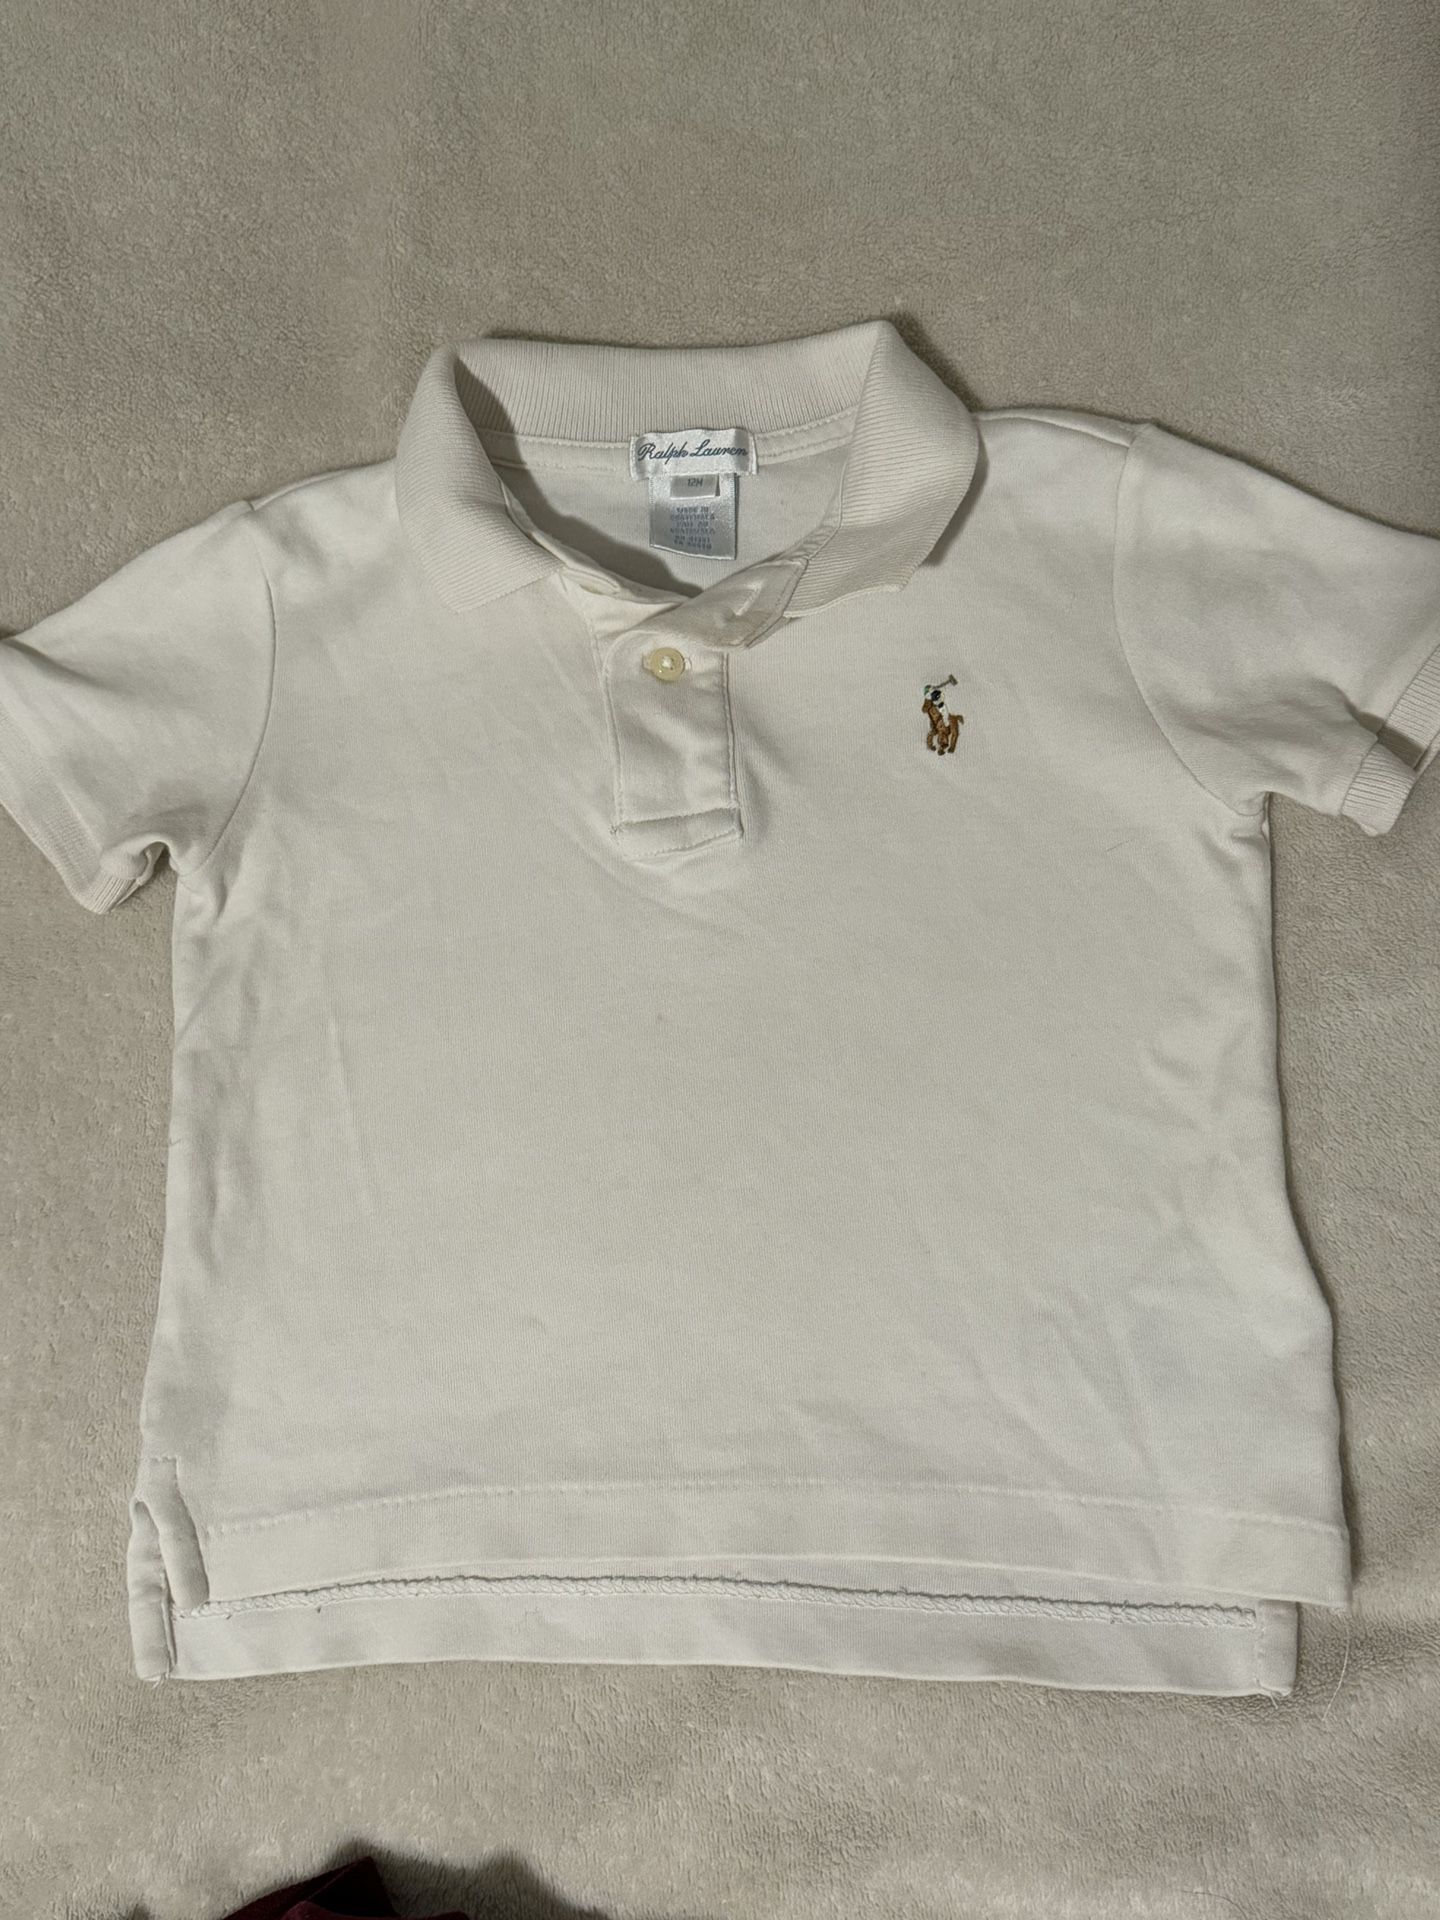 Ralph Lauren Baby Boy Short Sleeve Polo Shirt - White 12 Months